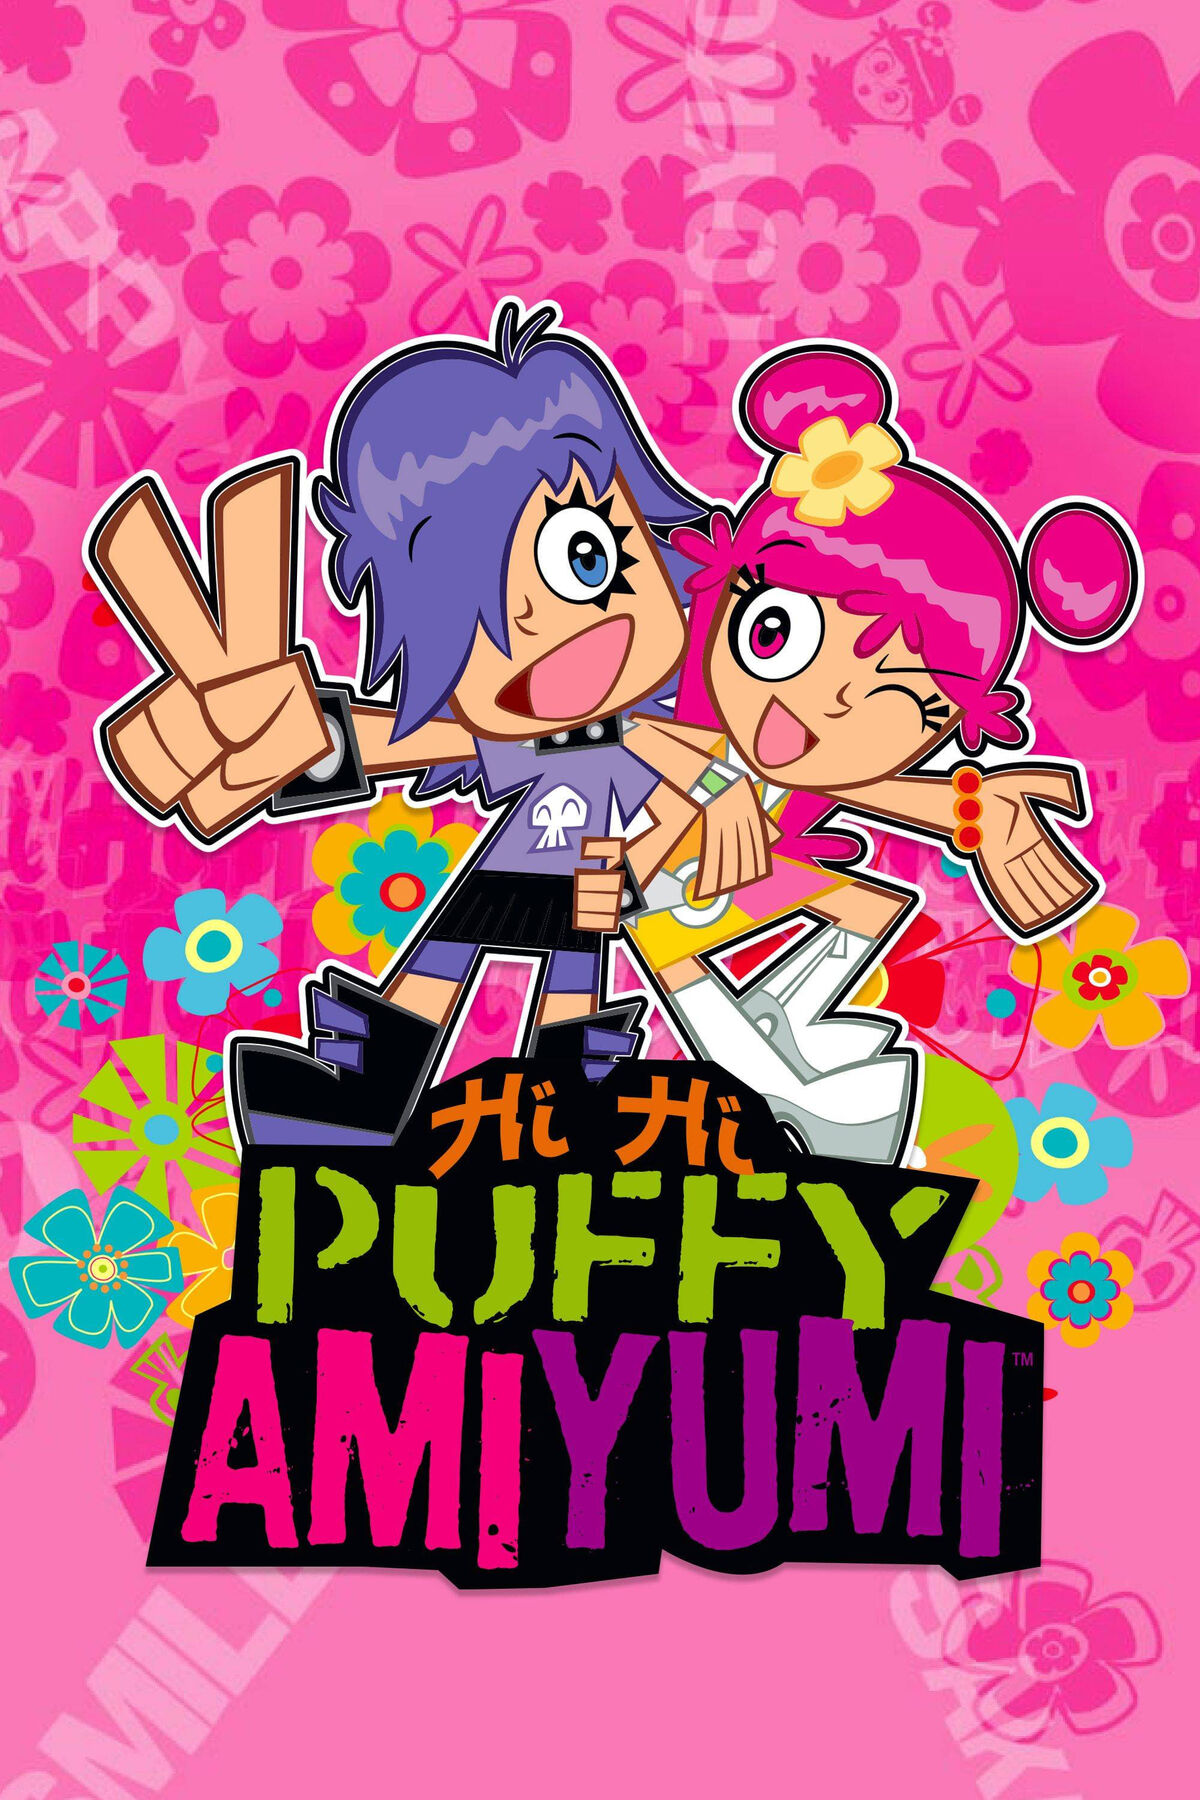 Hi Hi Puffy AmiYumi Cartoon Network Germany Minisite : Cartoon Network  Germany : Free Download, Borrow, and Streaming : Internet Archive